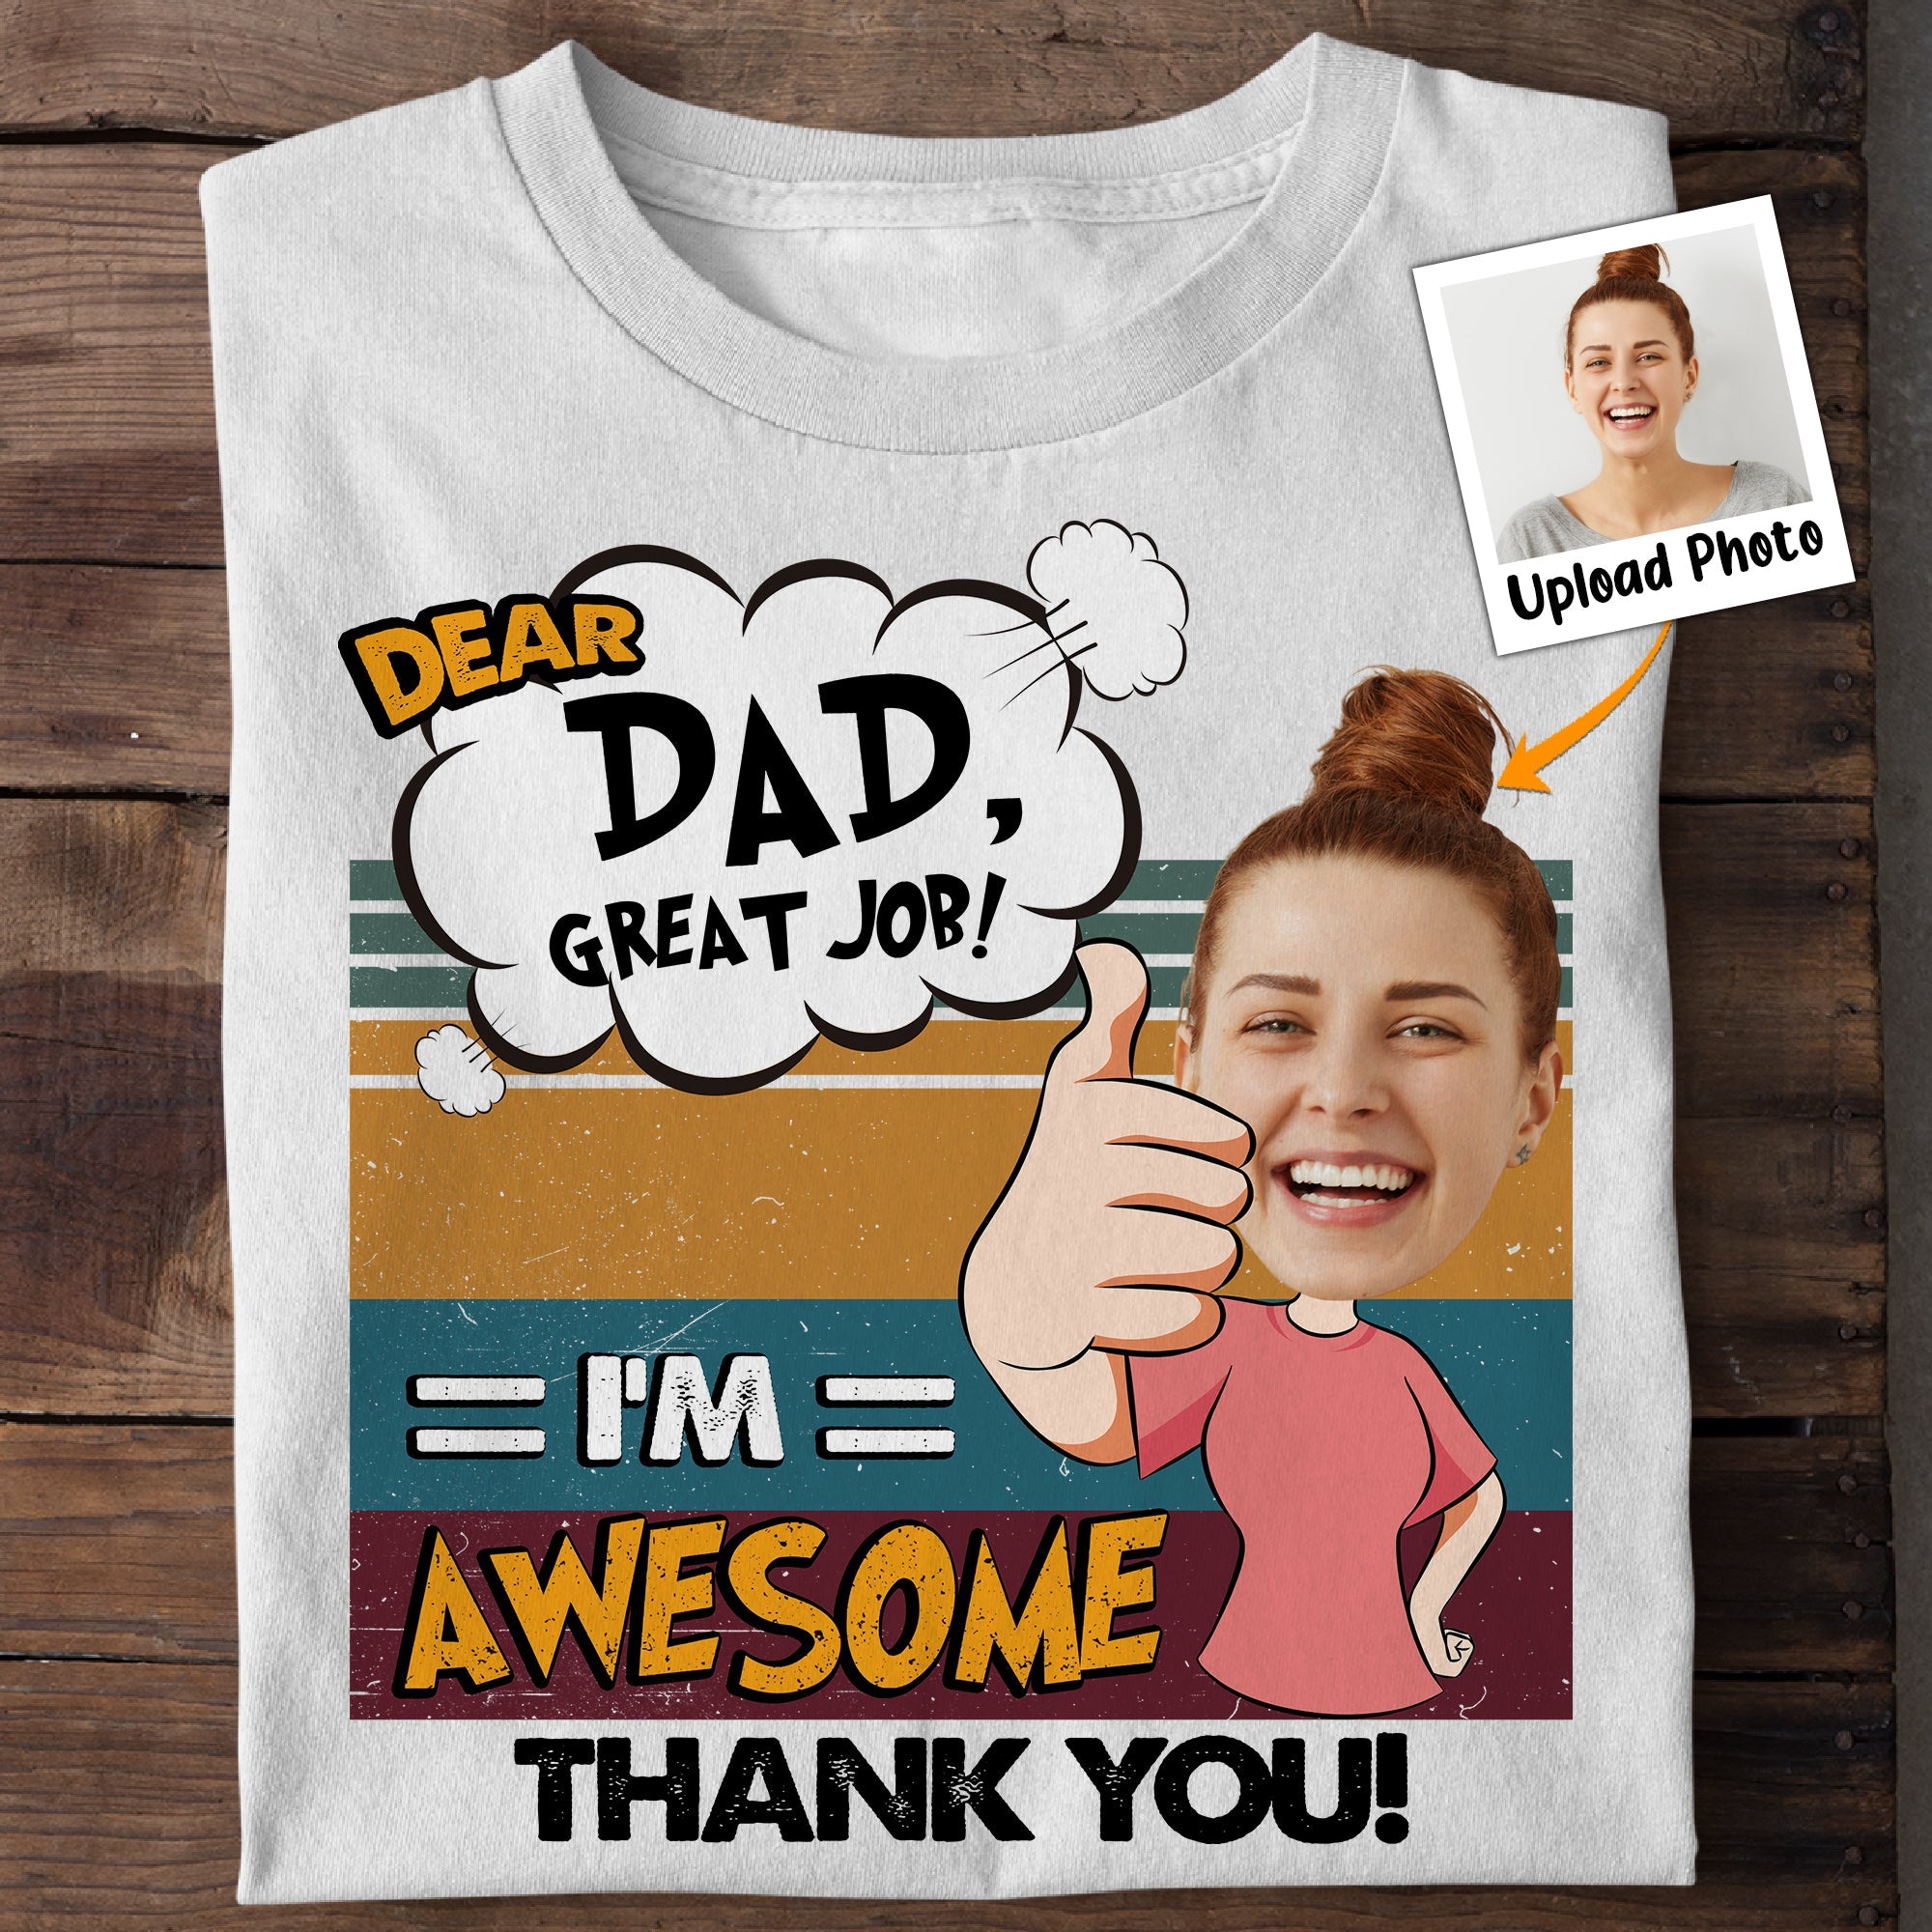 Dear Dad, Great Job! - Personalized Photo Shirt